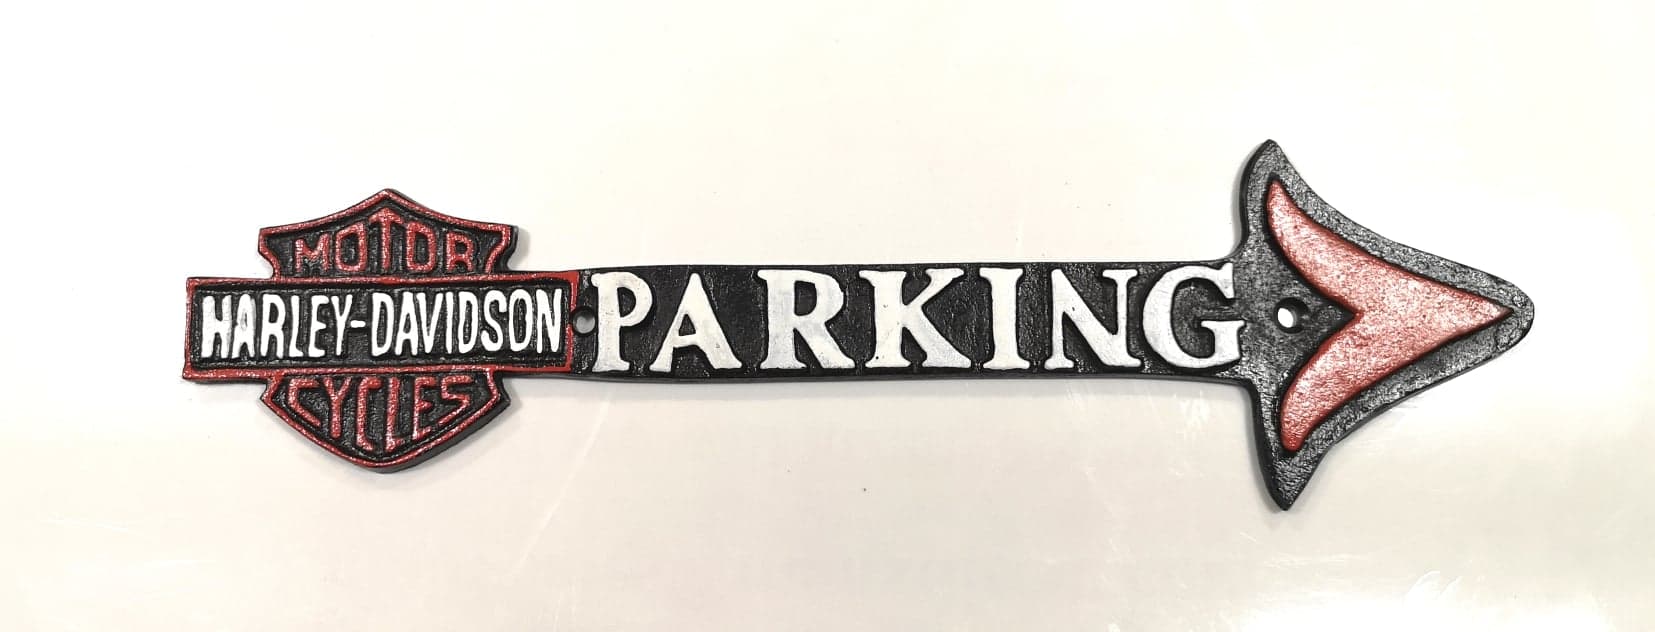 Harley Davidson Parking Arrow Cast Iron Wall Plaque Advertising Sign 40cm x 12cm